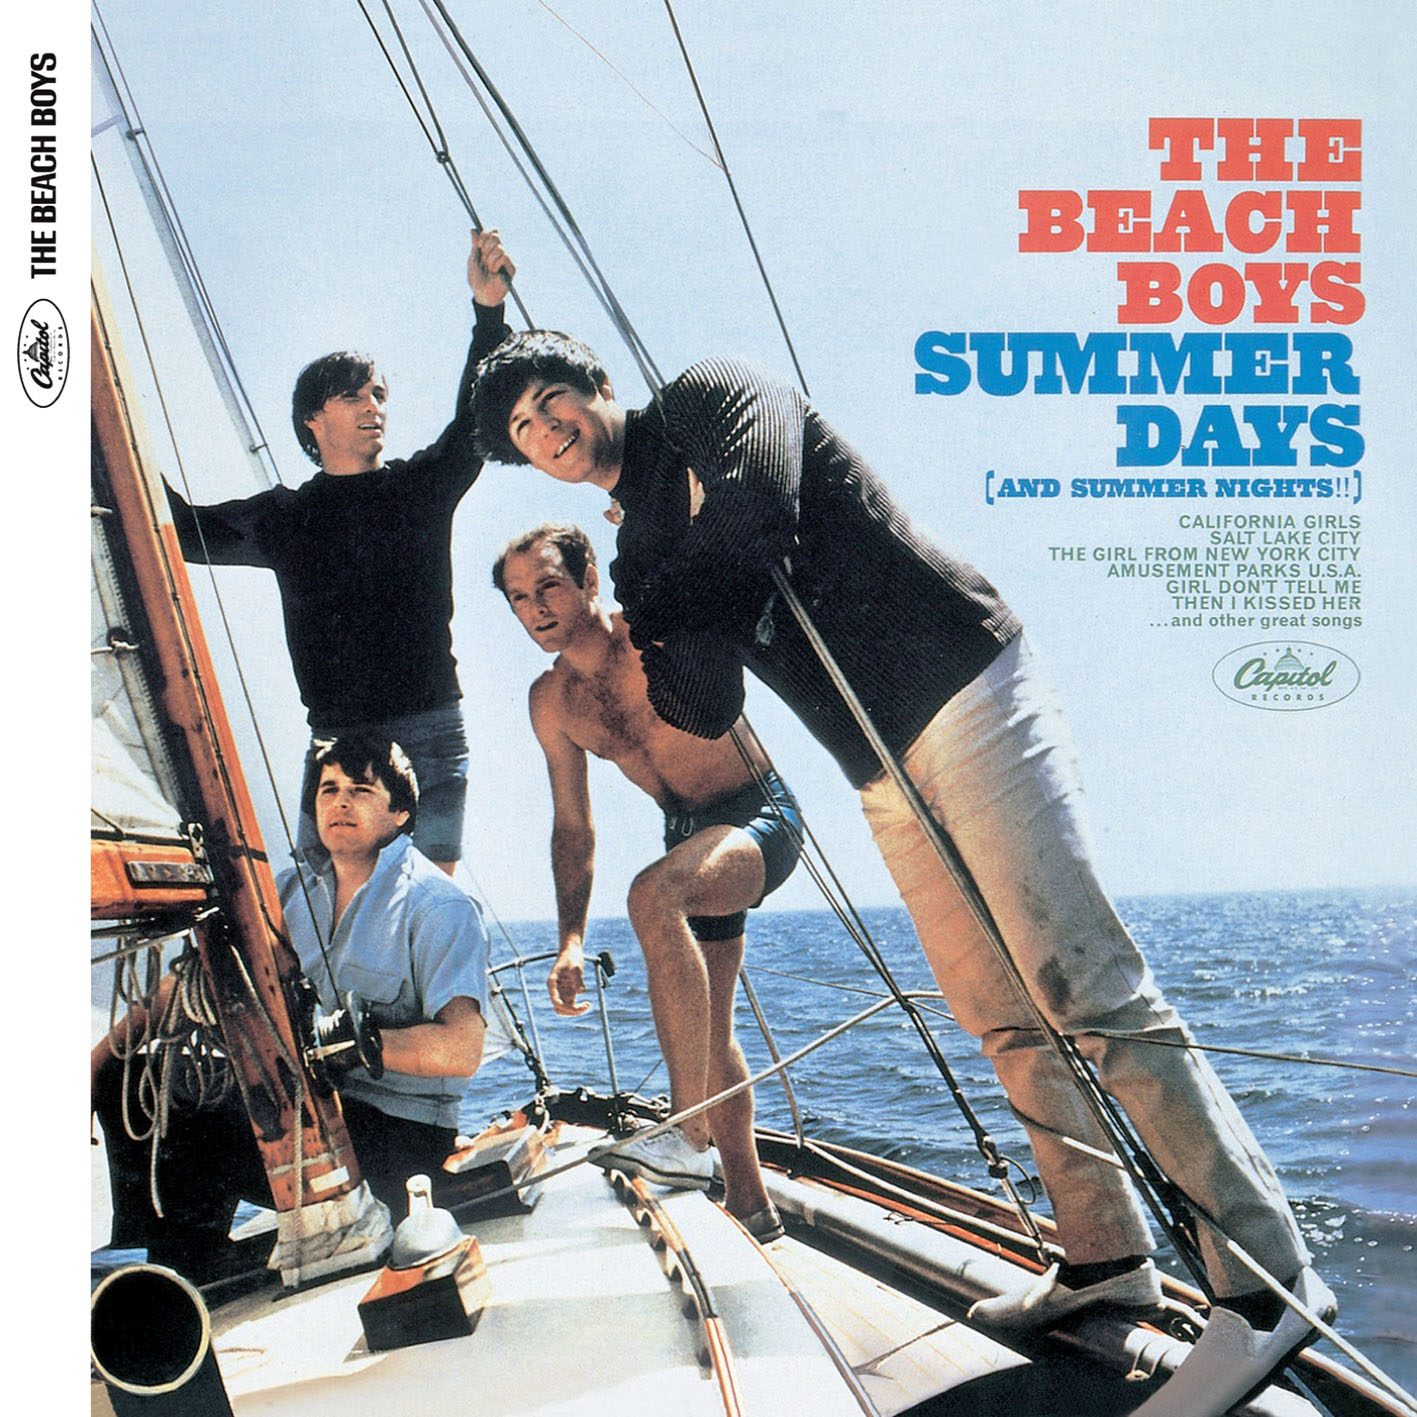 The Beach Boys - Summer Days (And Summer Nights!!) (1965/2015) [HDTracks FLAC 24bit/192kHz]